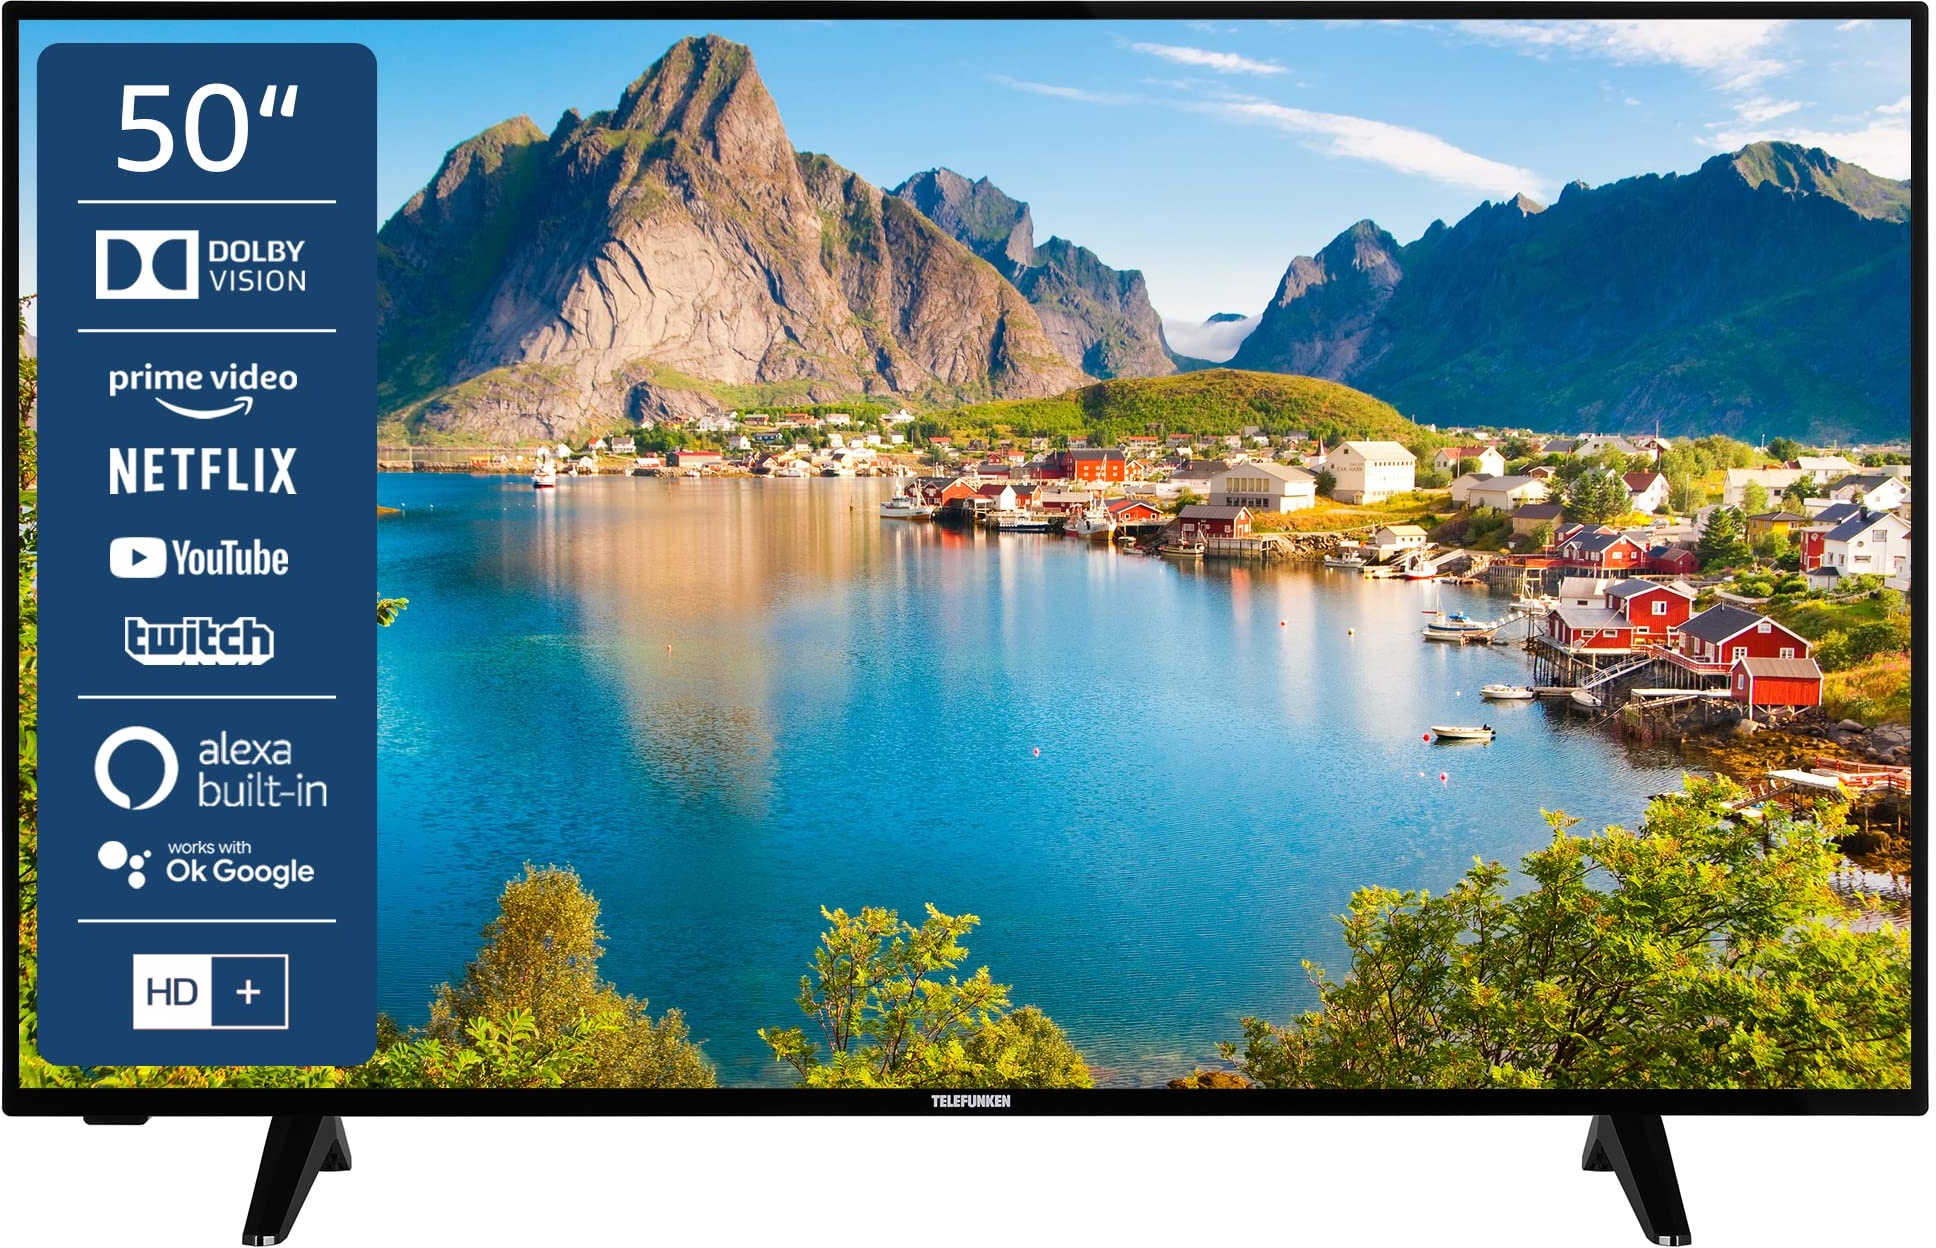 Telefunken D50U550X1CW 50 Zoll Fernseher/Smart TV (4K UHD, HDR Dolby Vision, LED, Triple-Tuner, WLAN, Alexa Built-in) - inkl. 6 Monate HD+ [2022], schwarz